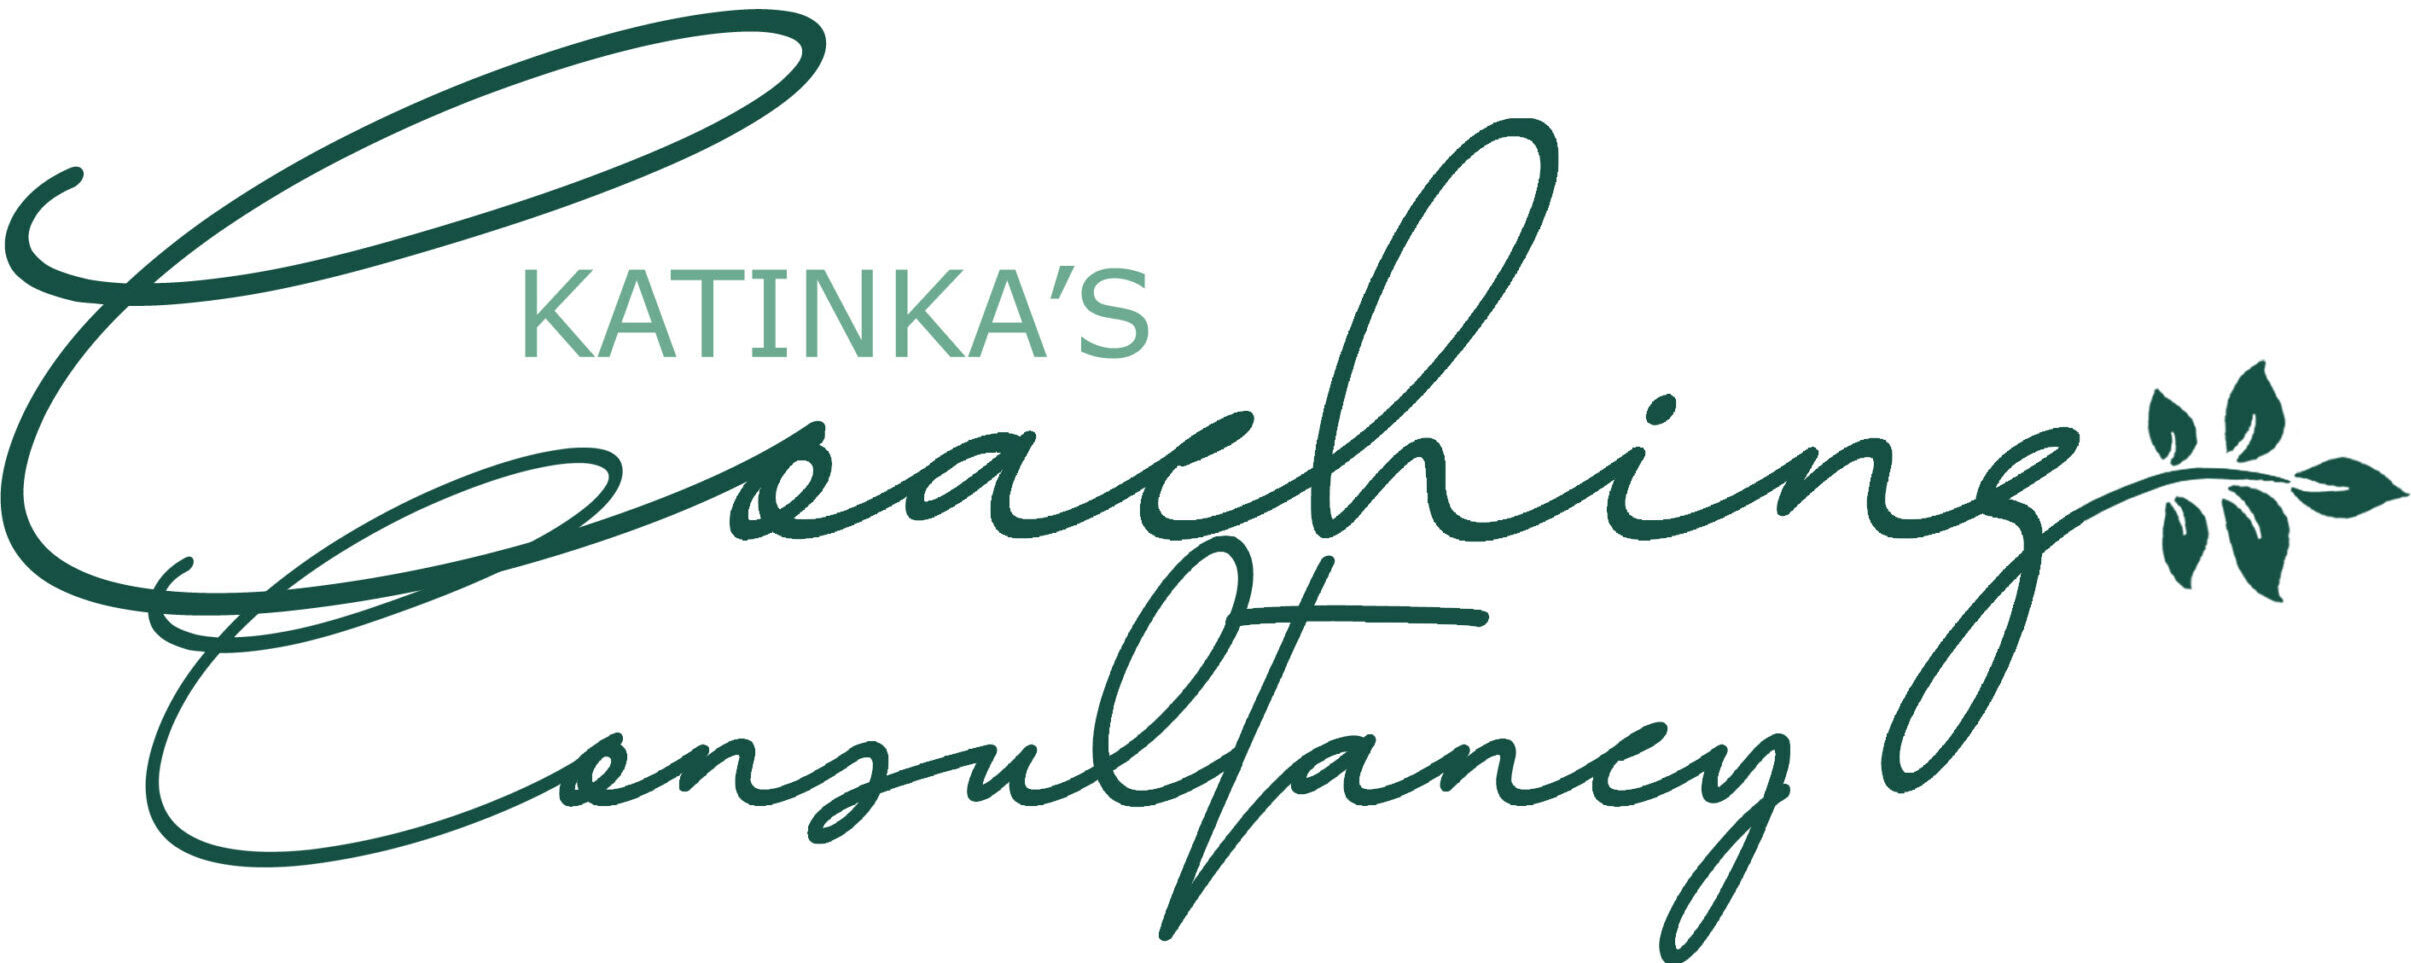 Katinka's Coaching & Consultancy 